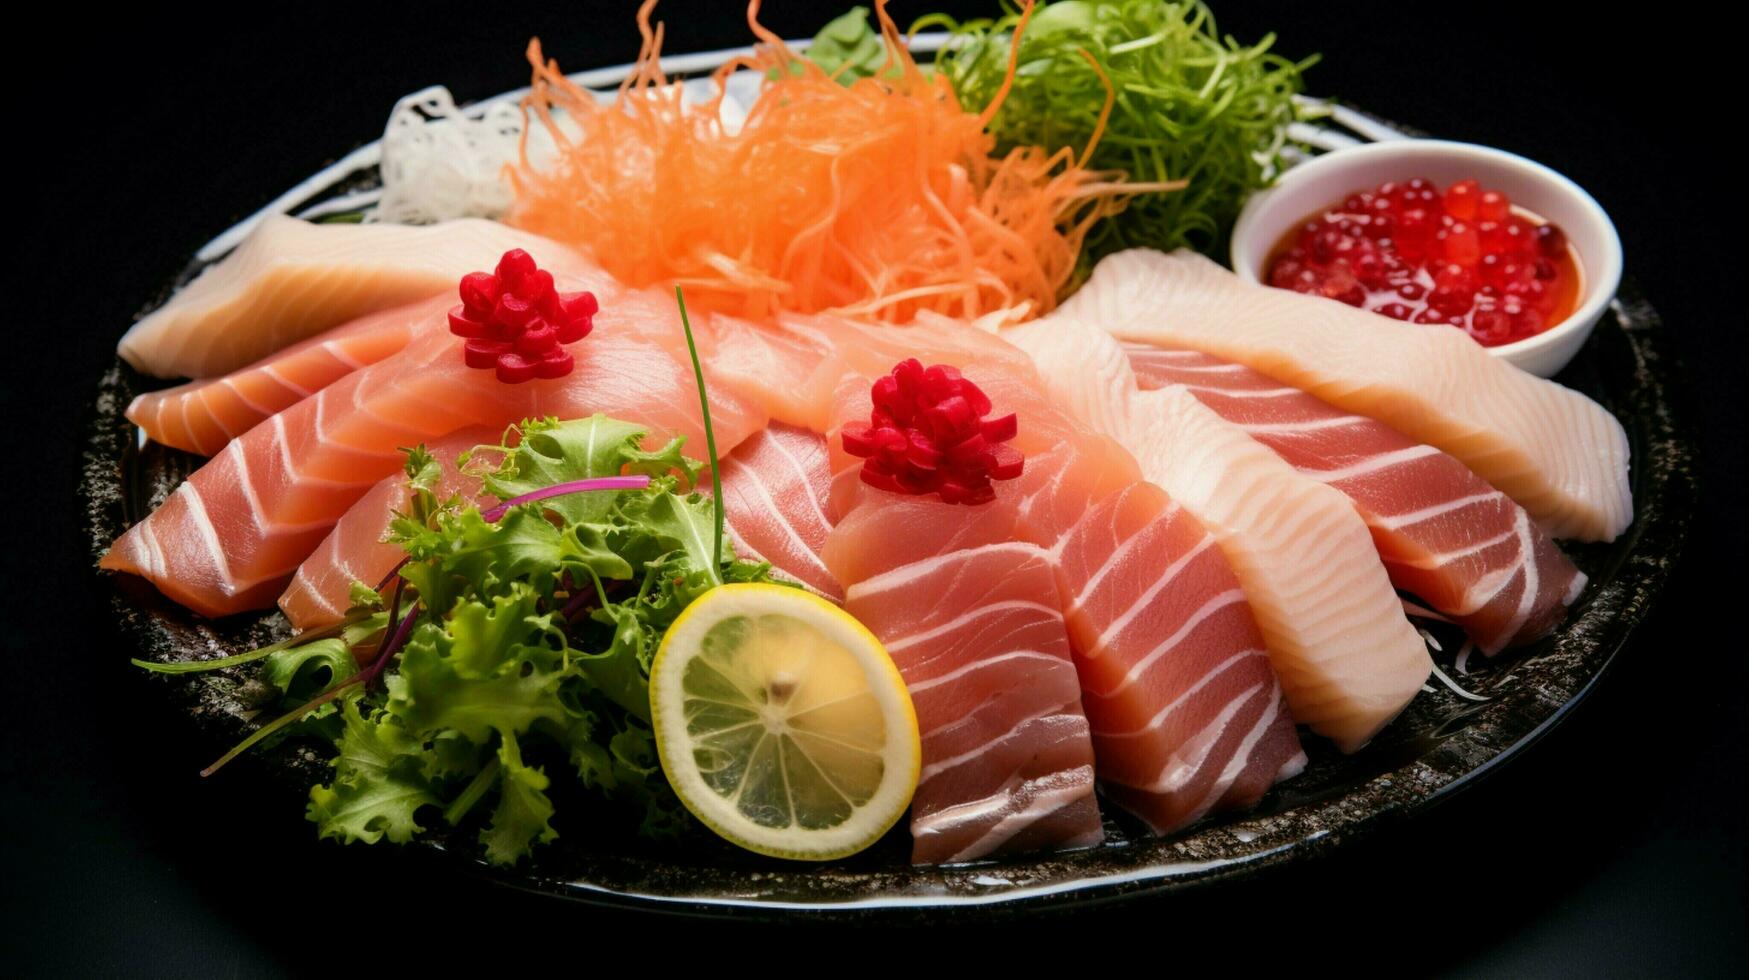 gourmet seafood meal plate of fresh sashimi healthy eating photo